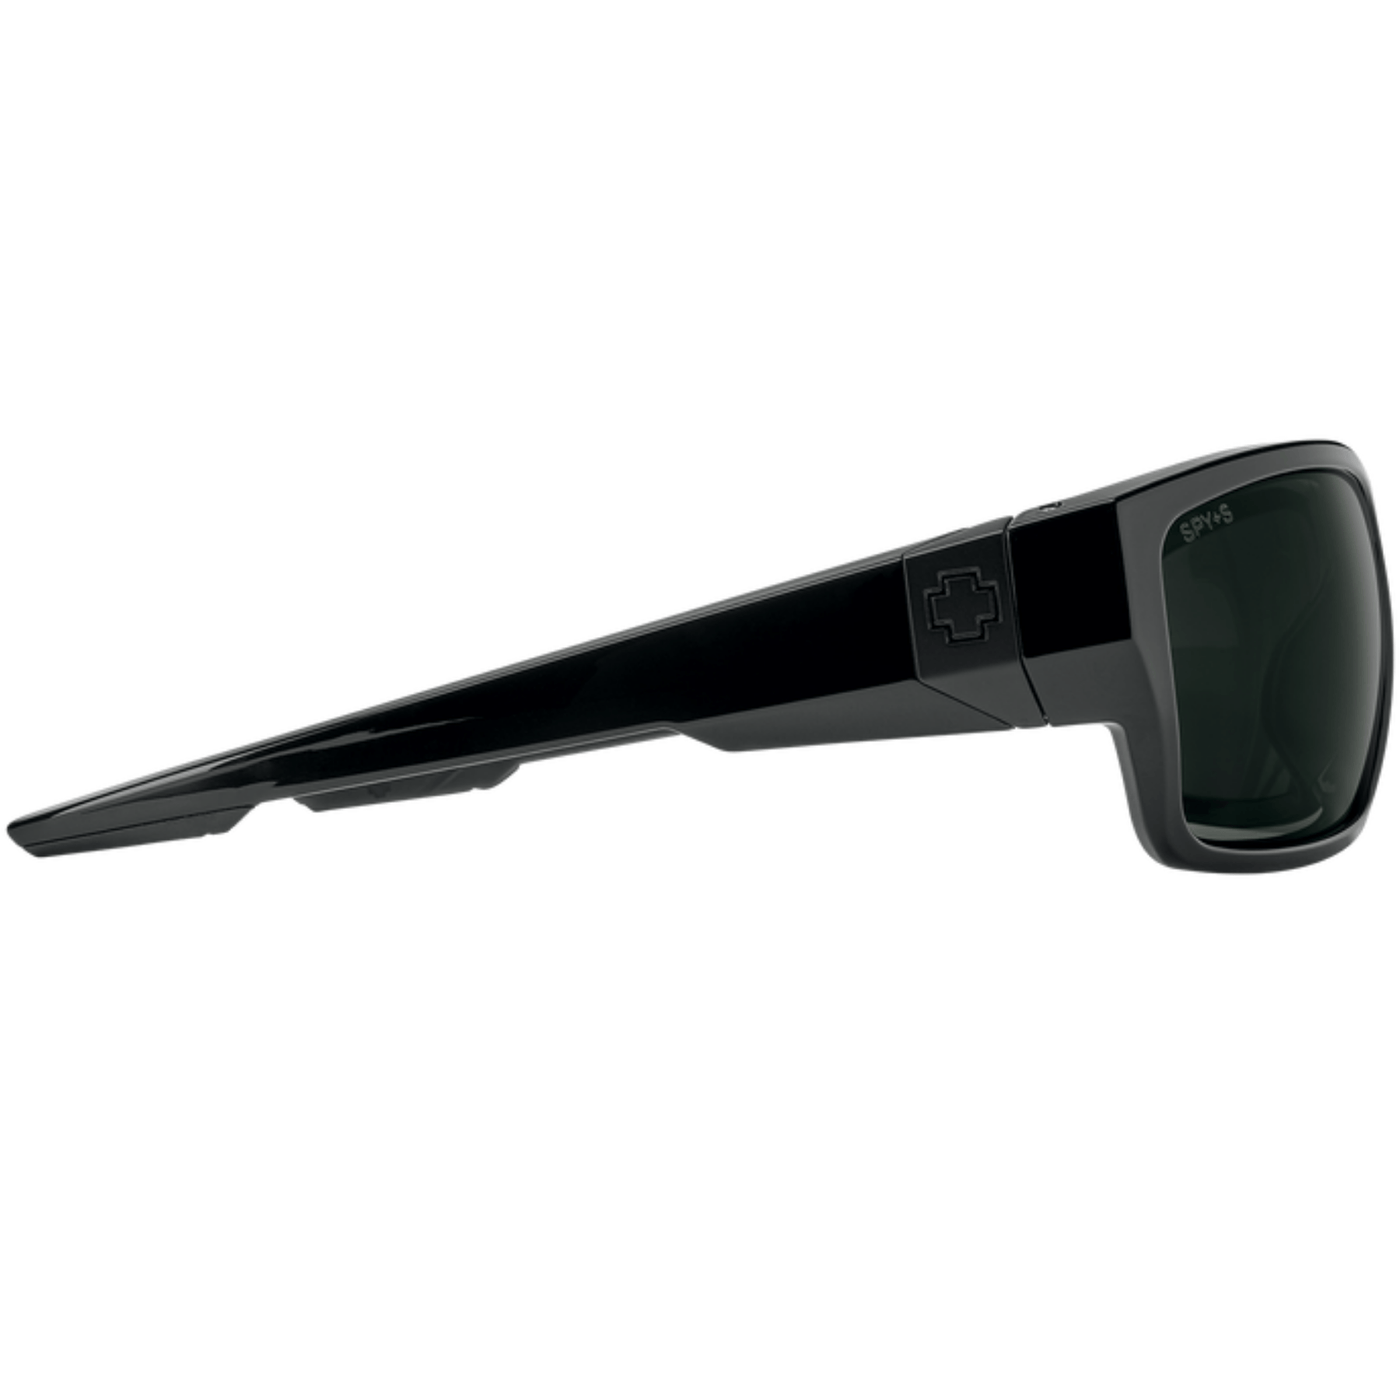 SPY DIRTY MO TECH ANSI Approved Sunglasses - Black